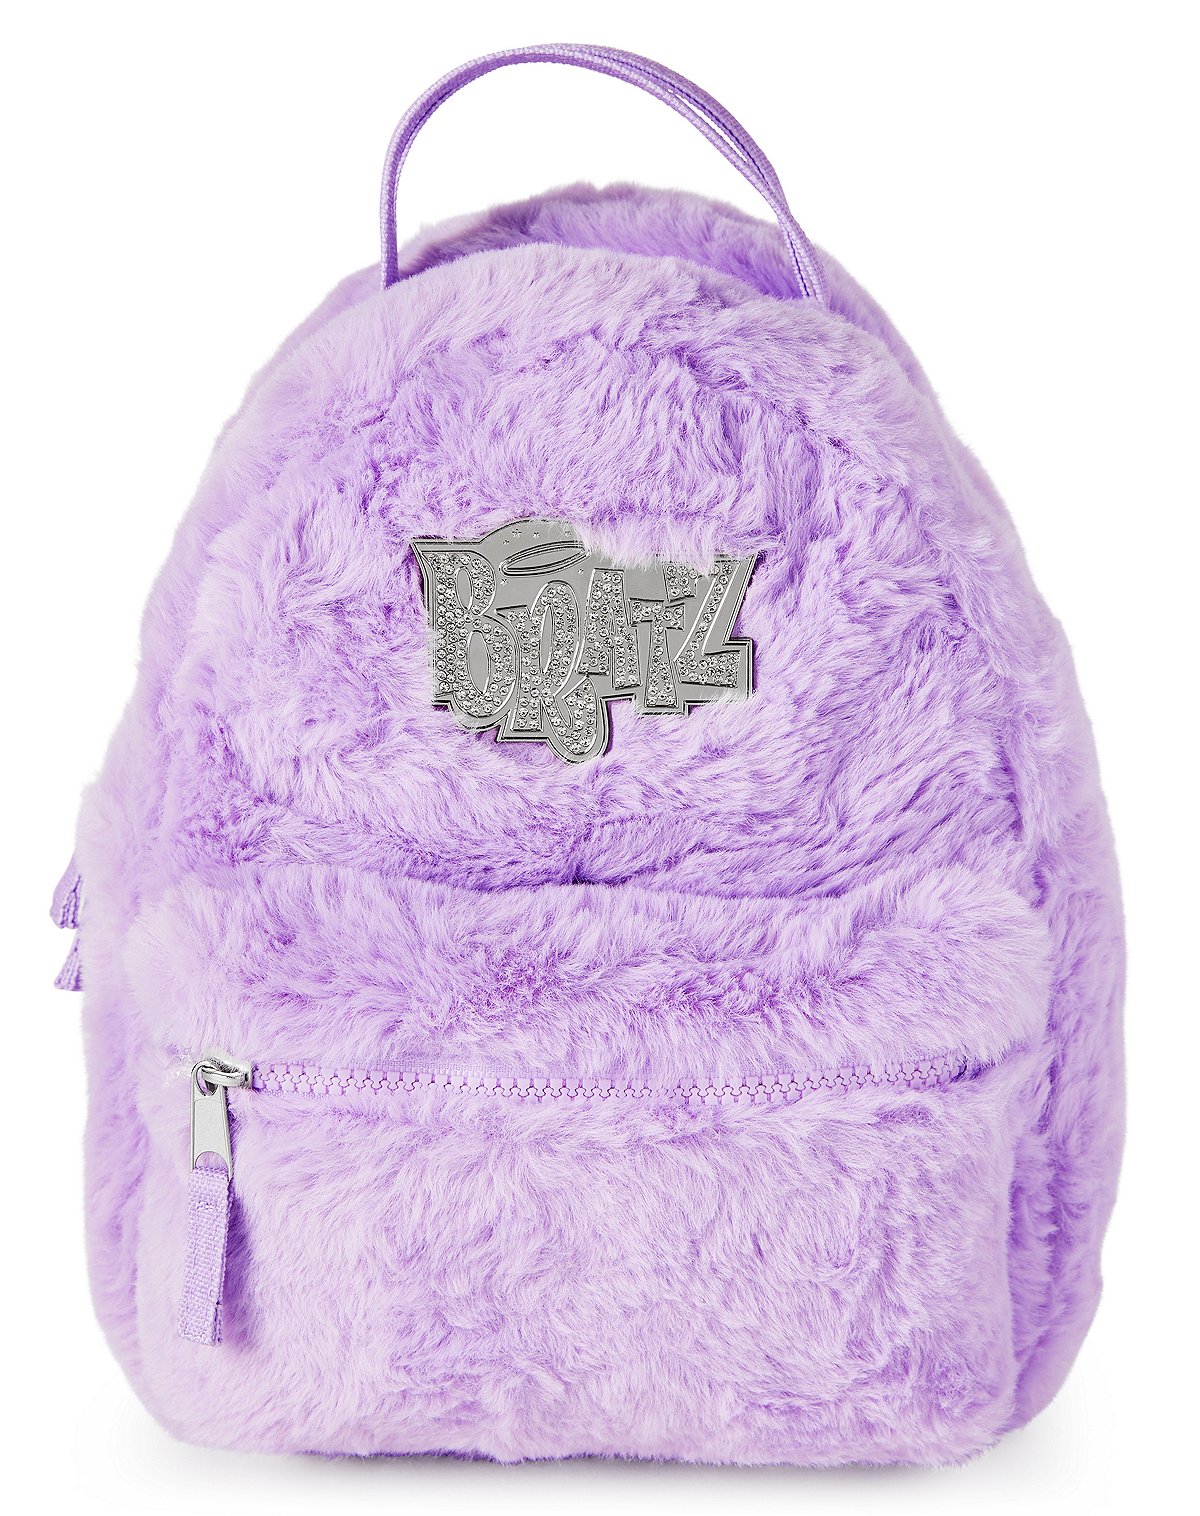 Bratz mini backpack